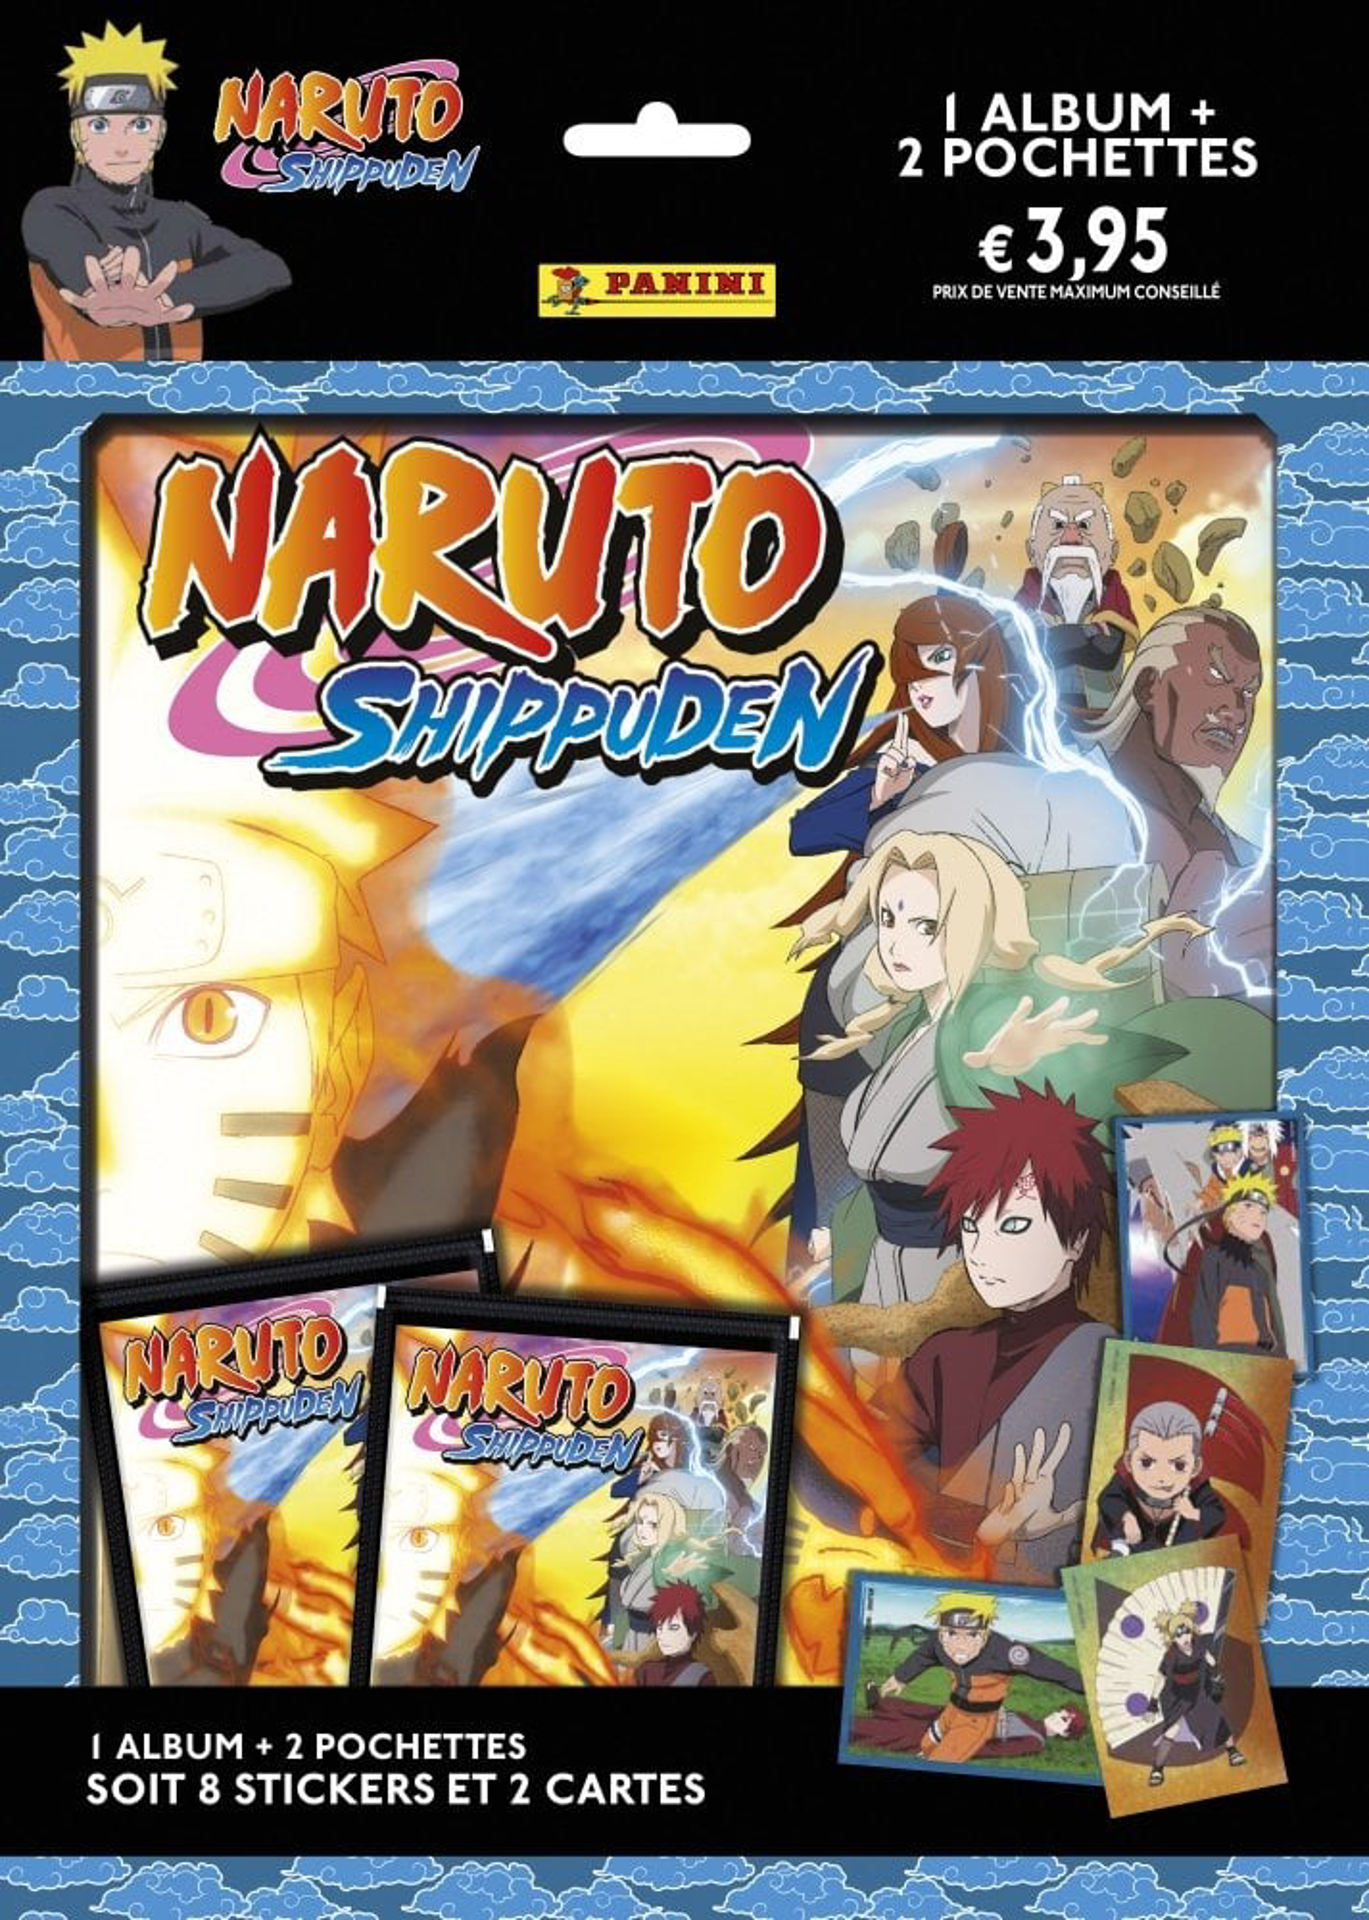 Panini - Pack de démarrage Naruto Shippuden (1 Album + 2 Pochettes)